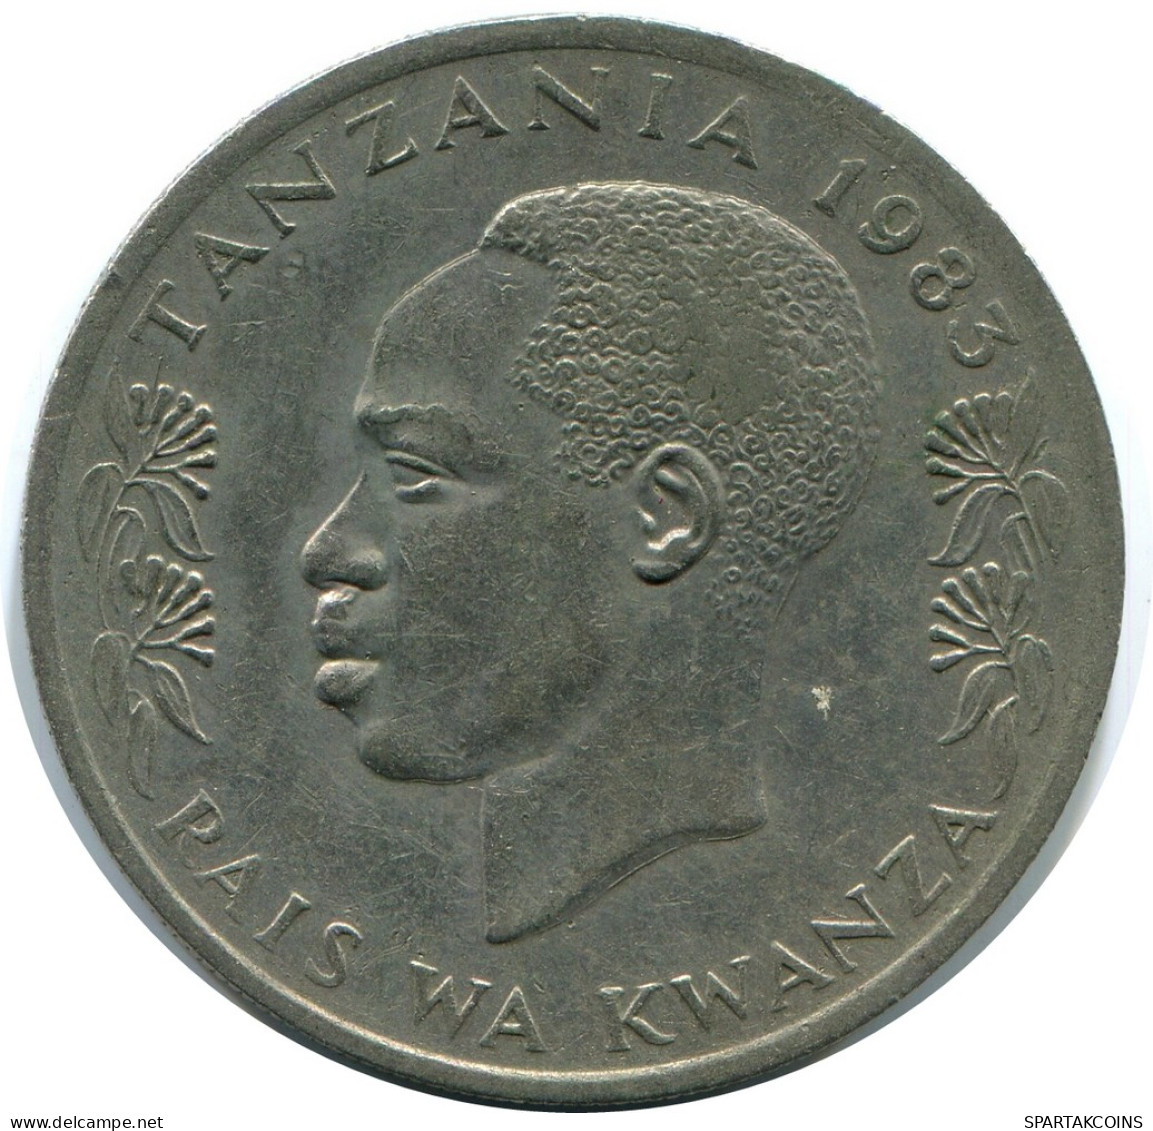 1 SHILINGI 1983 TANZANIA Coin #AZ090.U - Tanzania